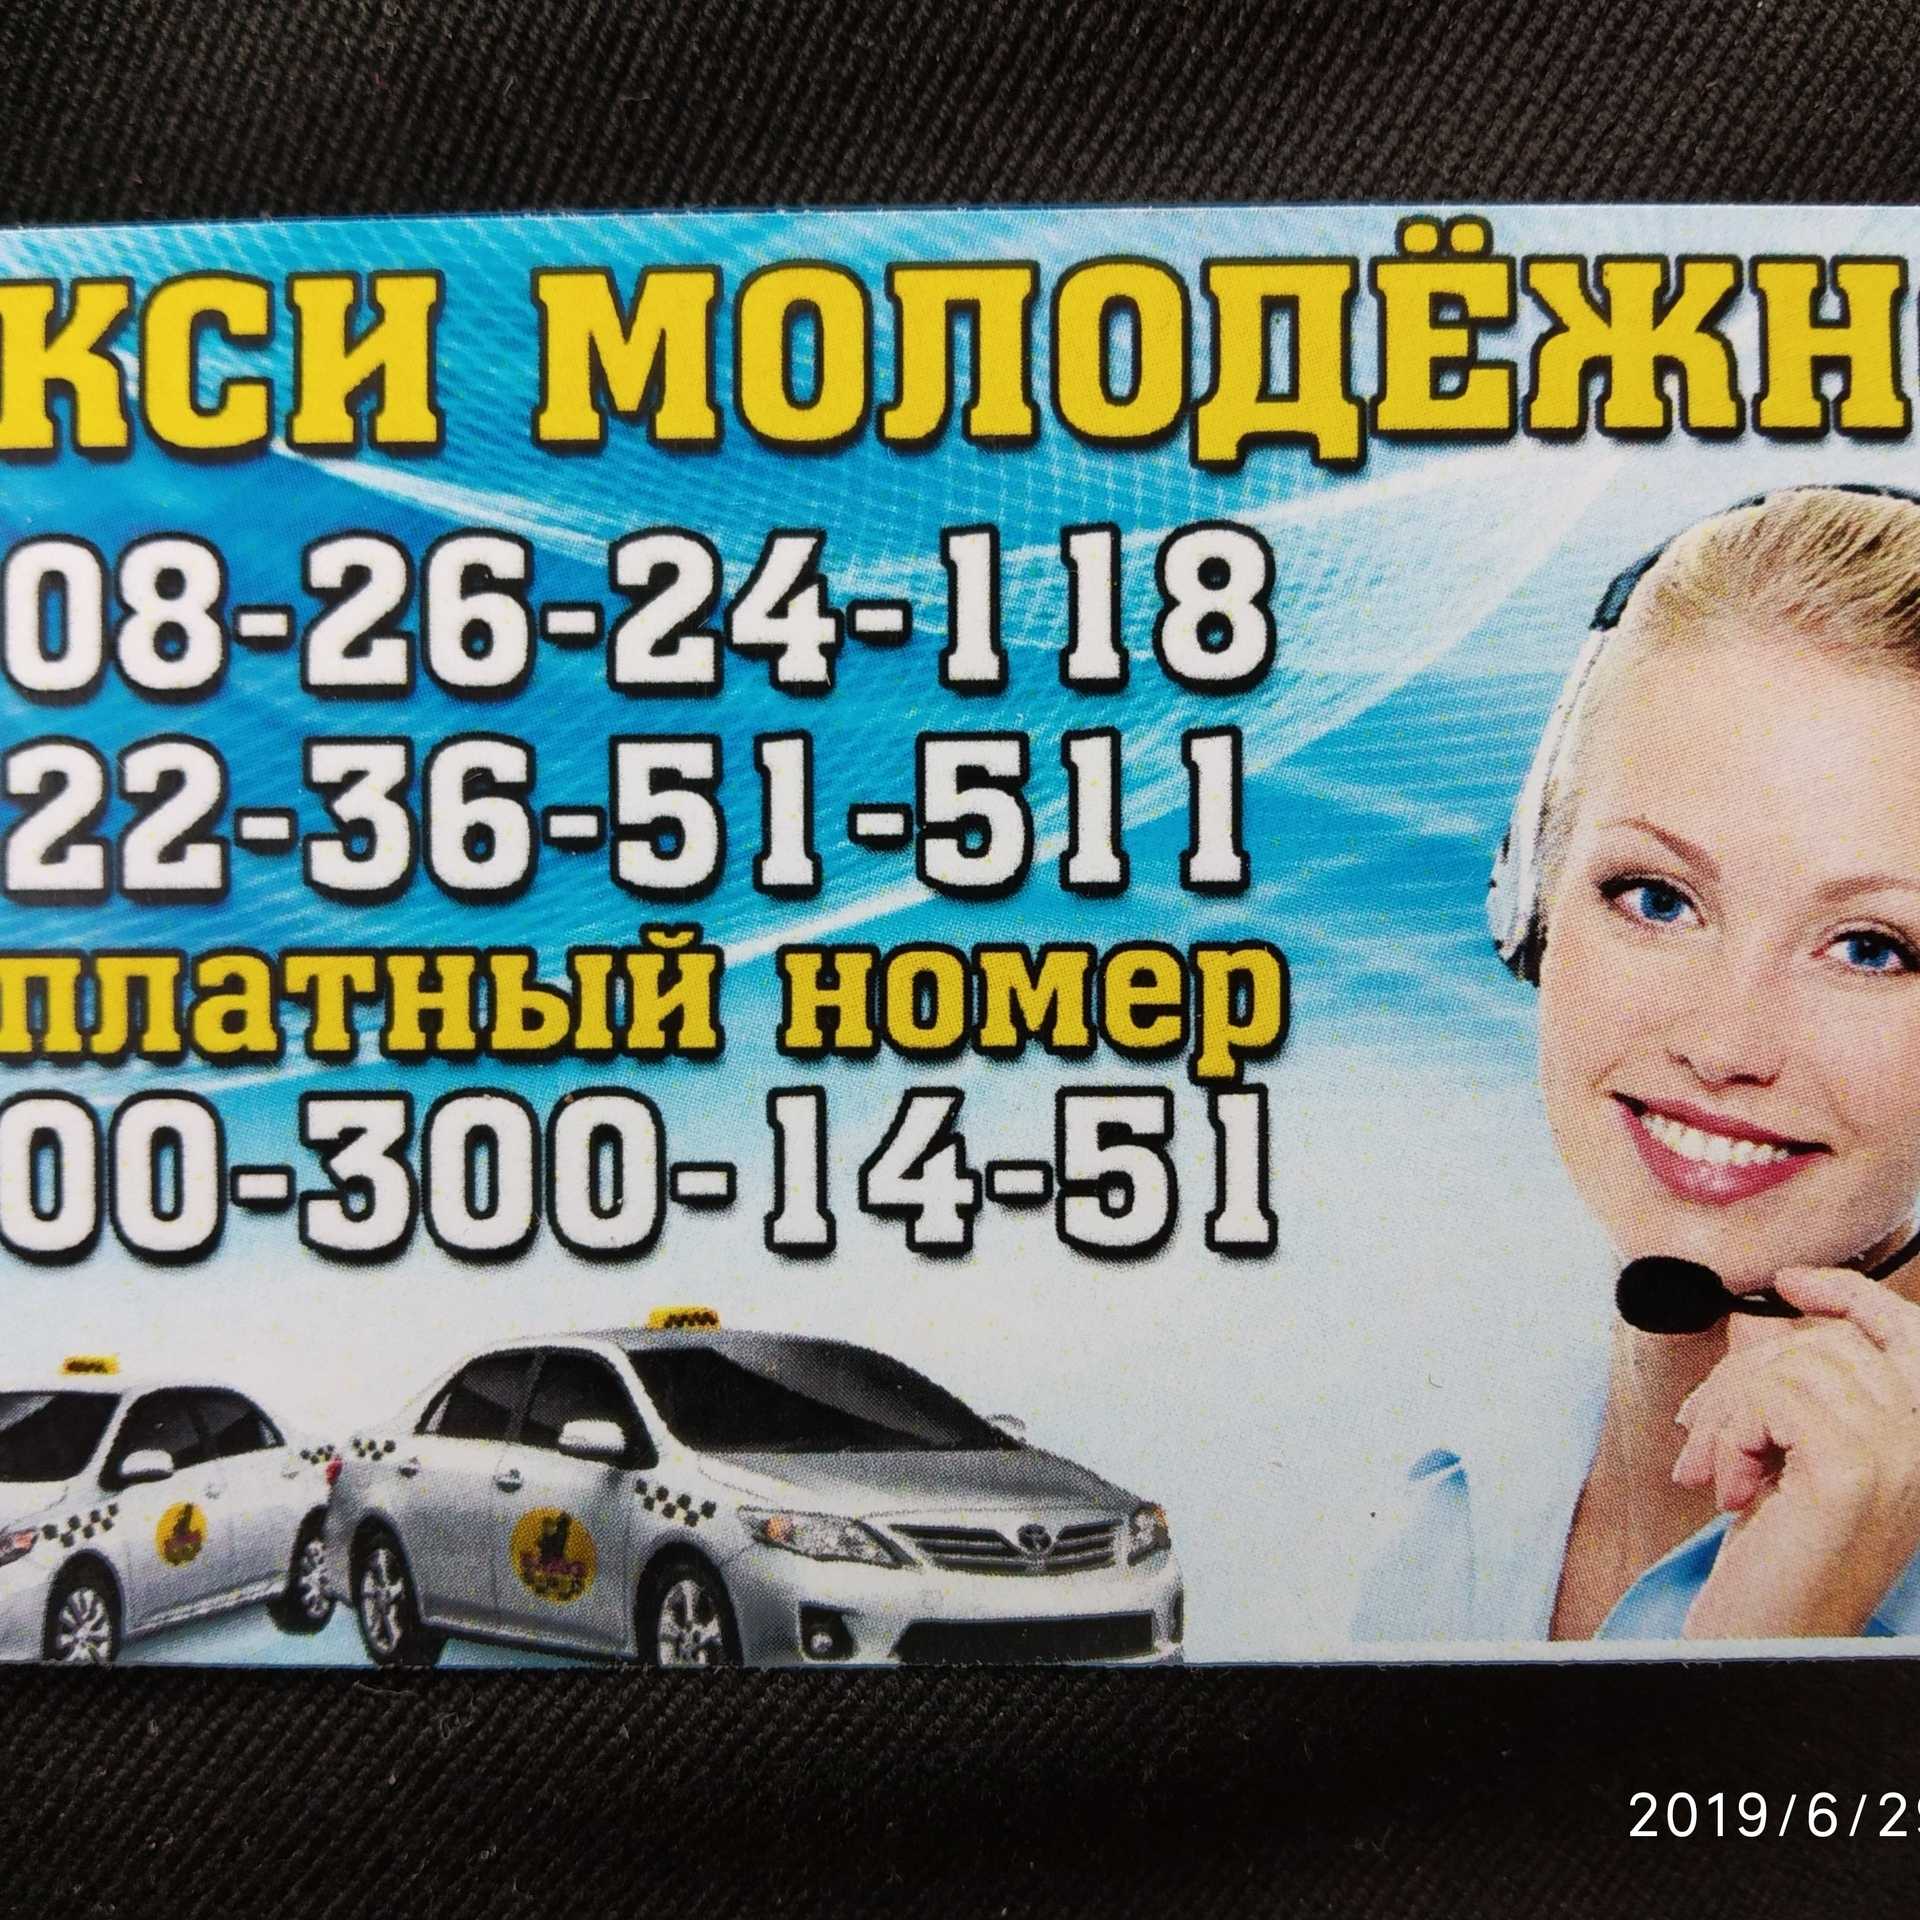 Белова такси номер телефона. Такси драйв барда Пермский край. Такси барда. Такси молодежное. Такси молодежное барда.